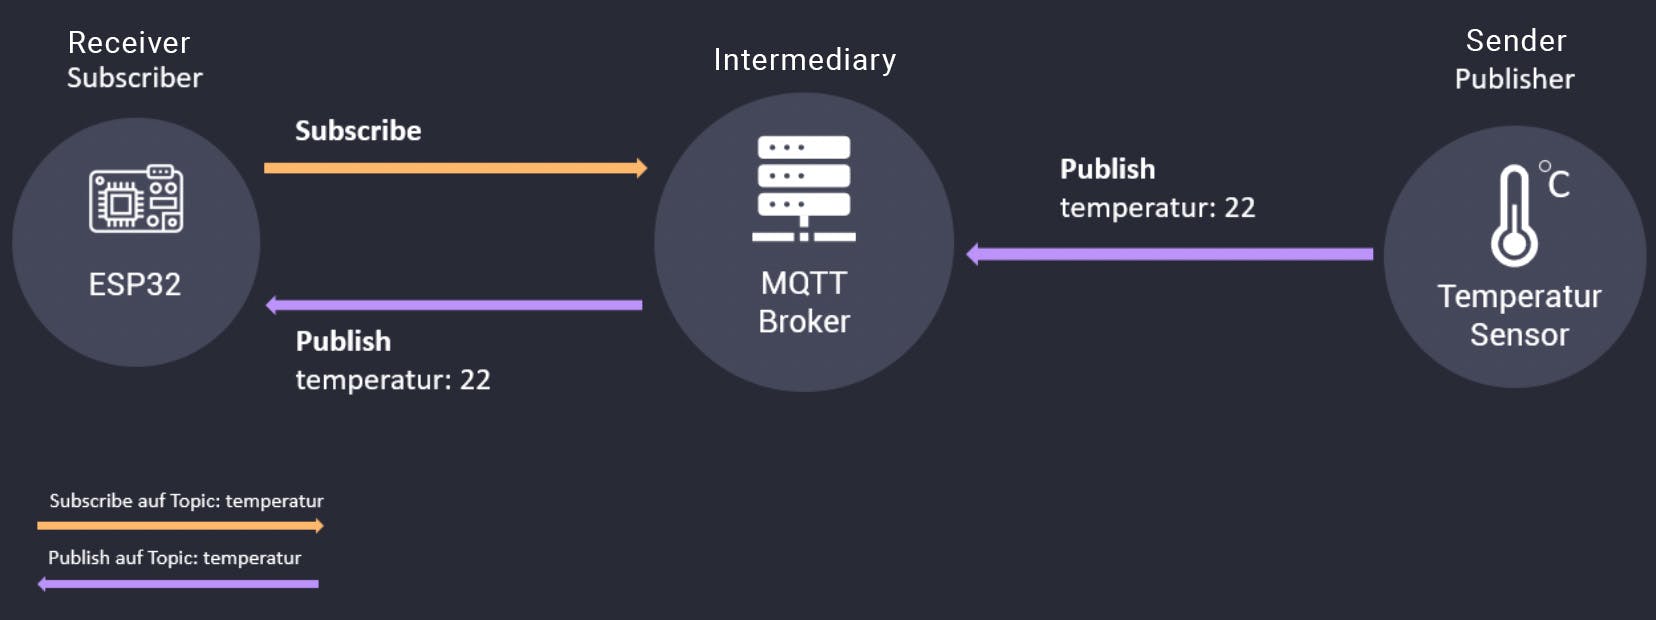 Illustration of a simplified MQTT communication